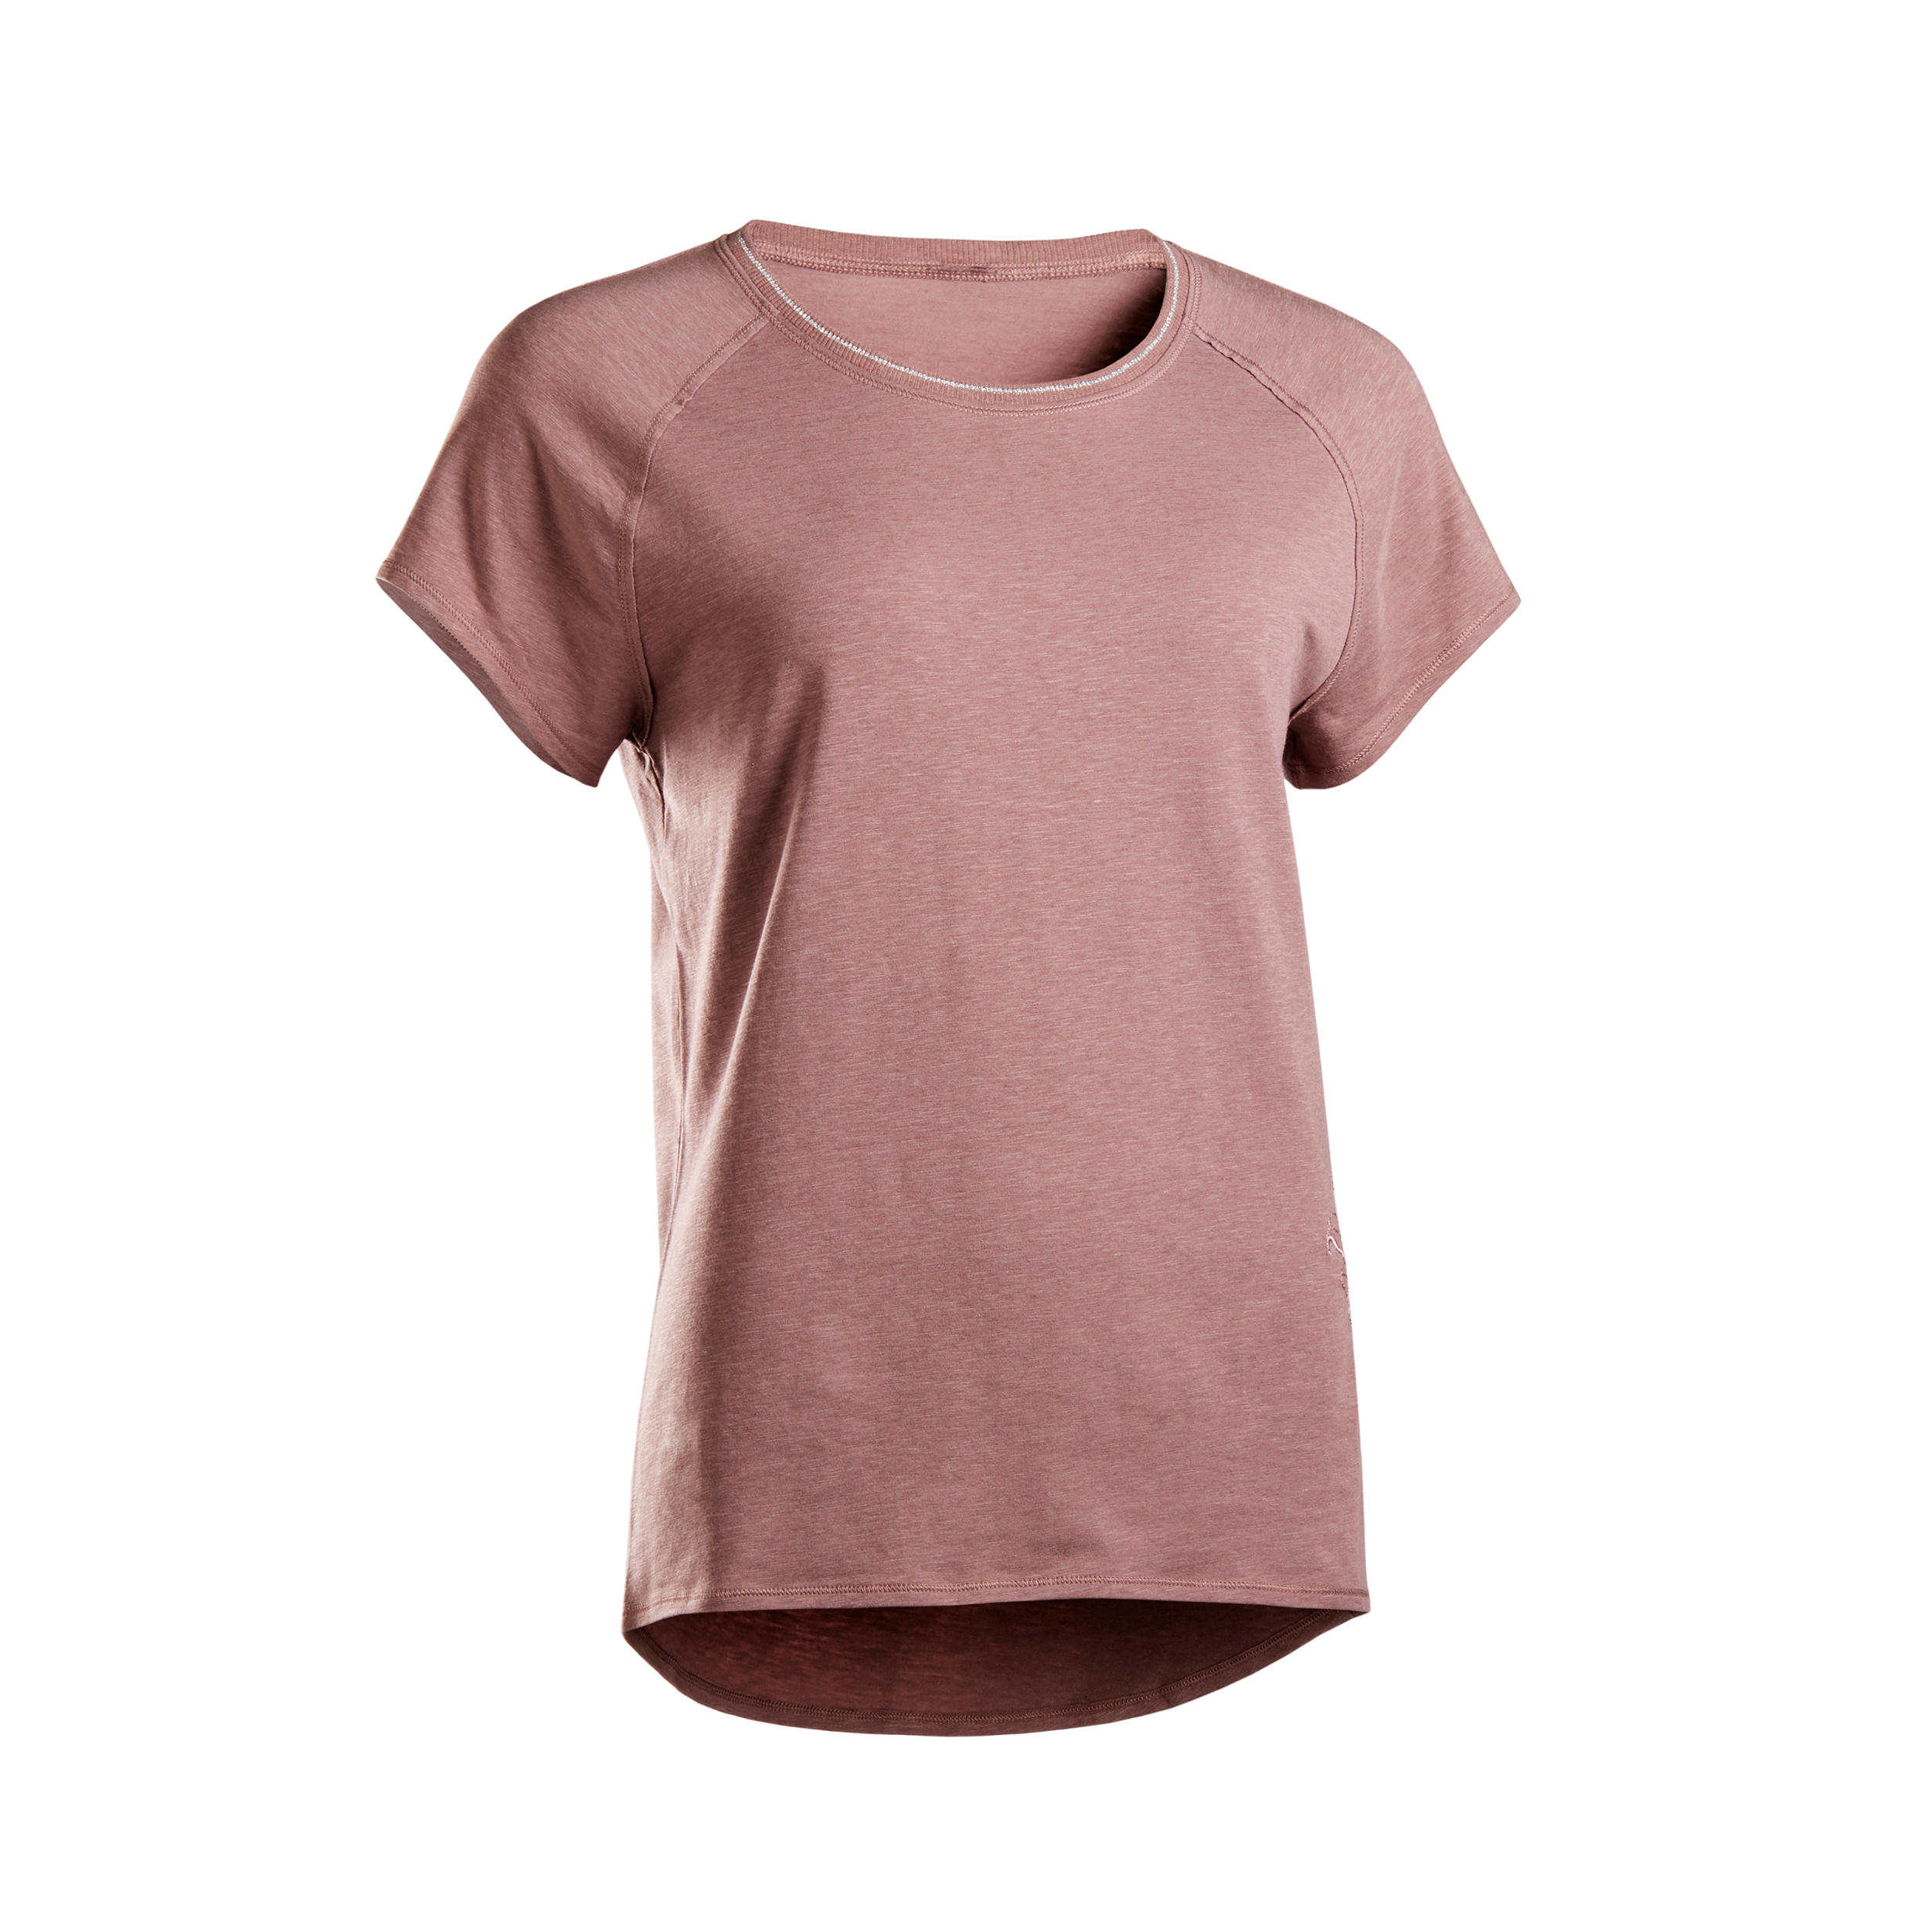 KIMJALY Women's Gentle Yoga T-Shirt - Plum